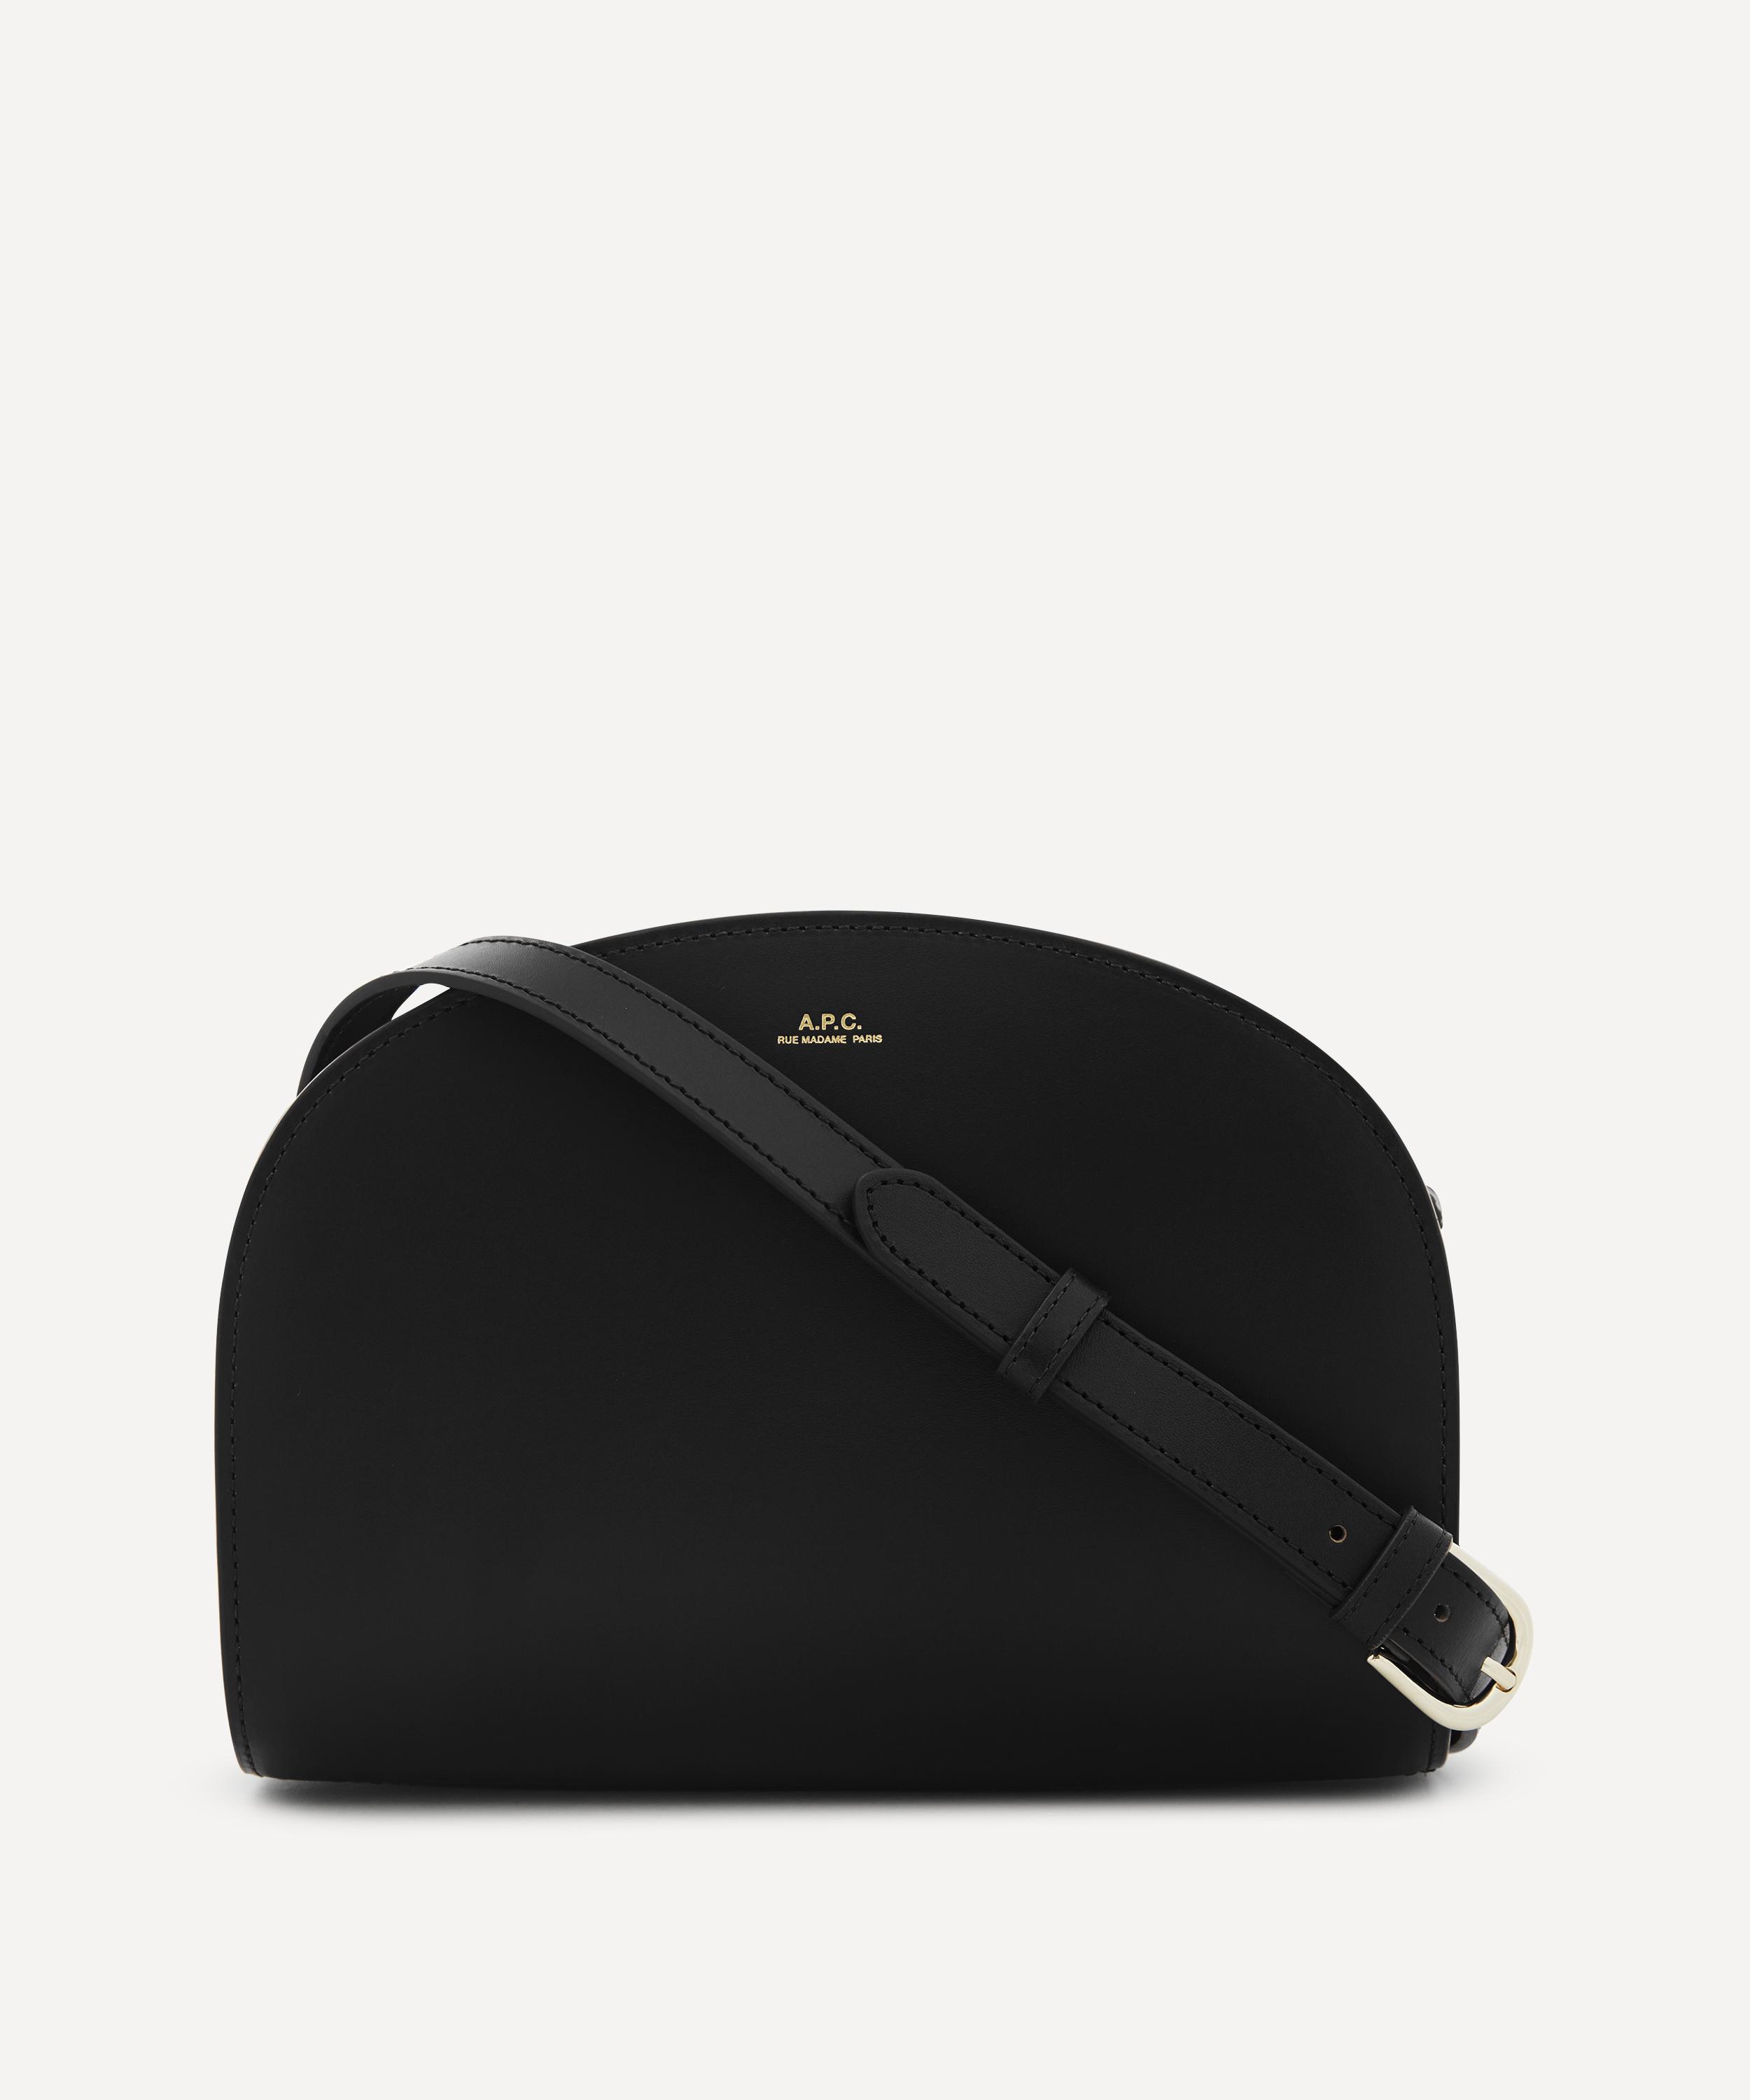 APC Authenticated Demi-Lune Leather Handbag